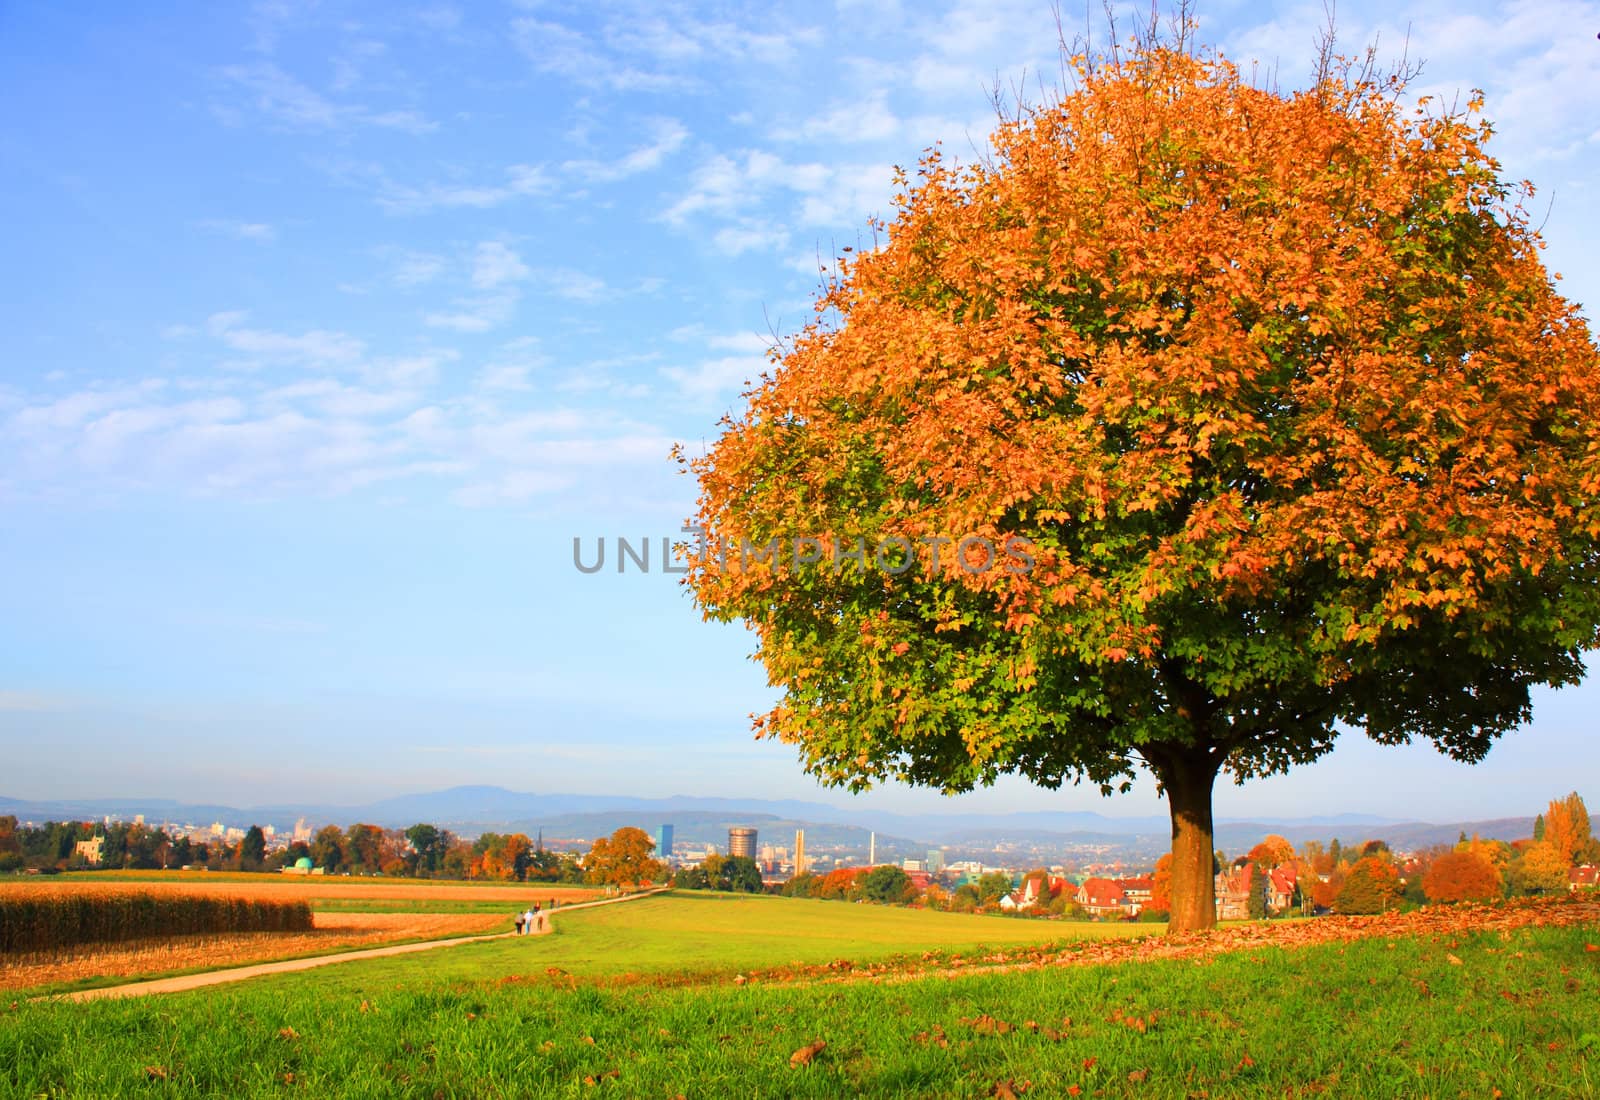 Autumn by juweber